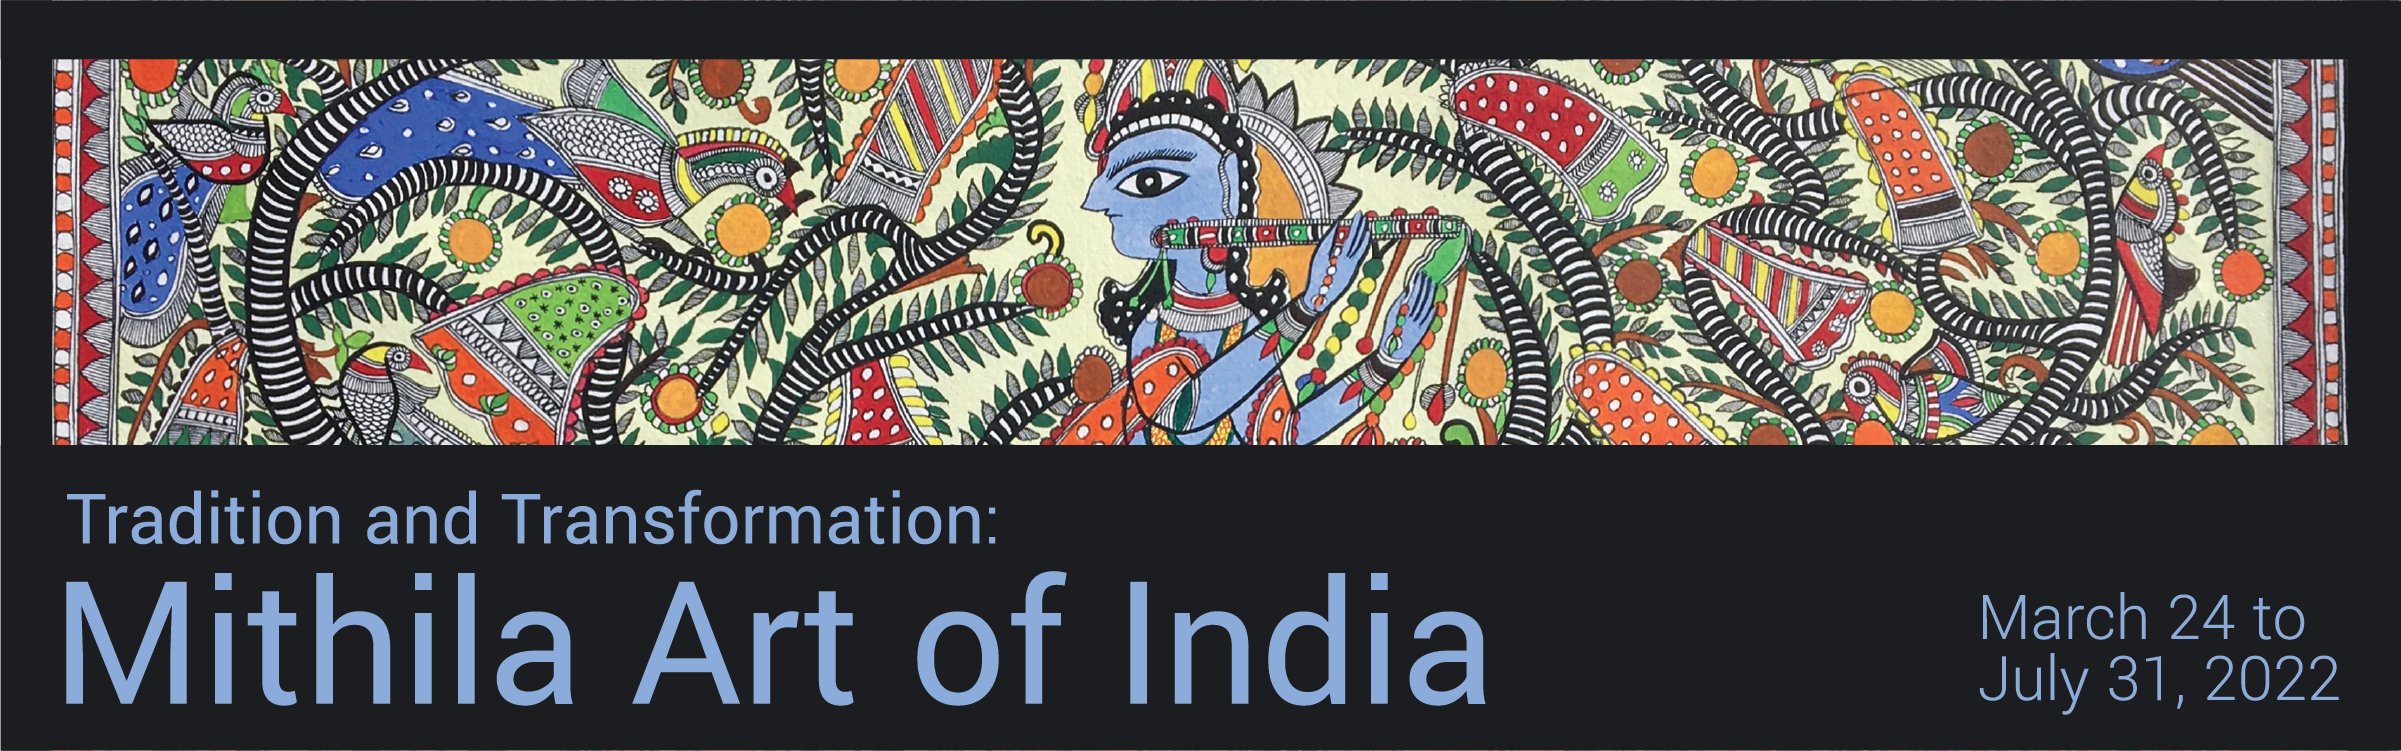 Mithila Art of India Banner